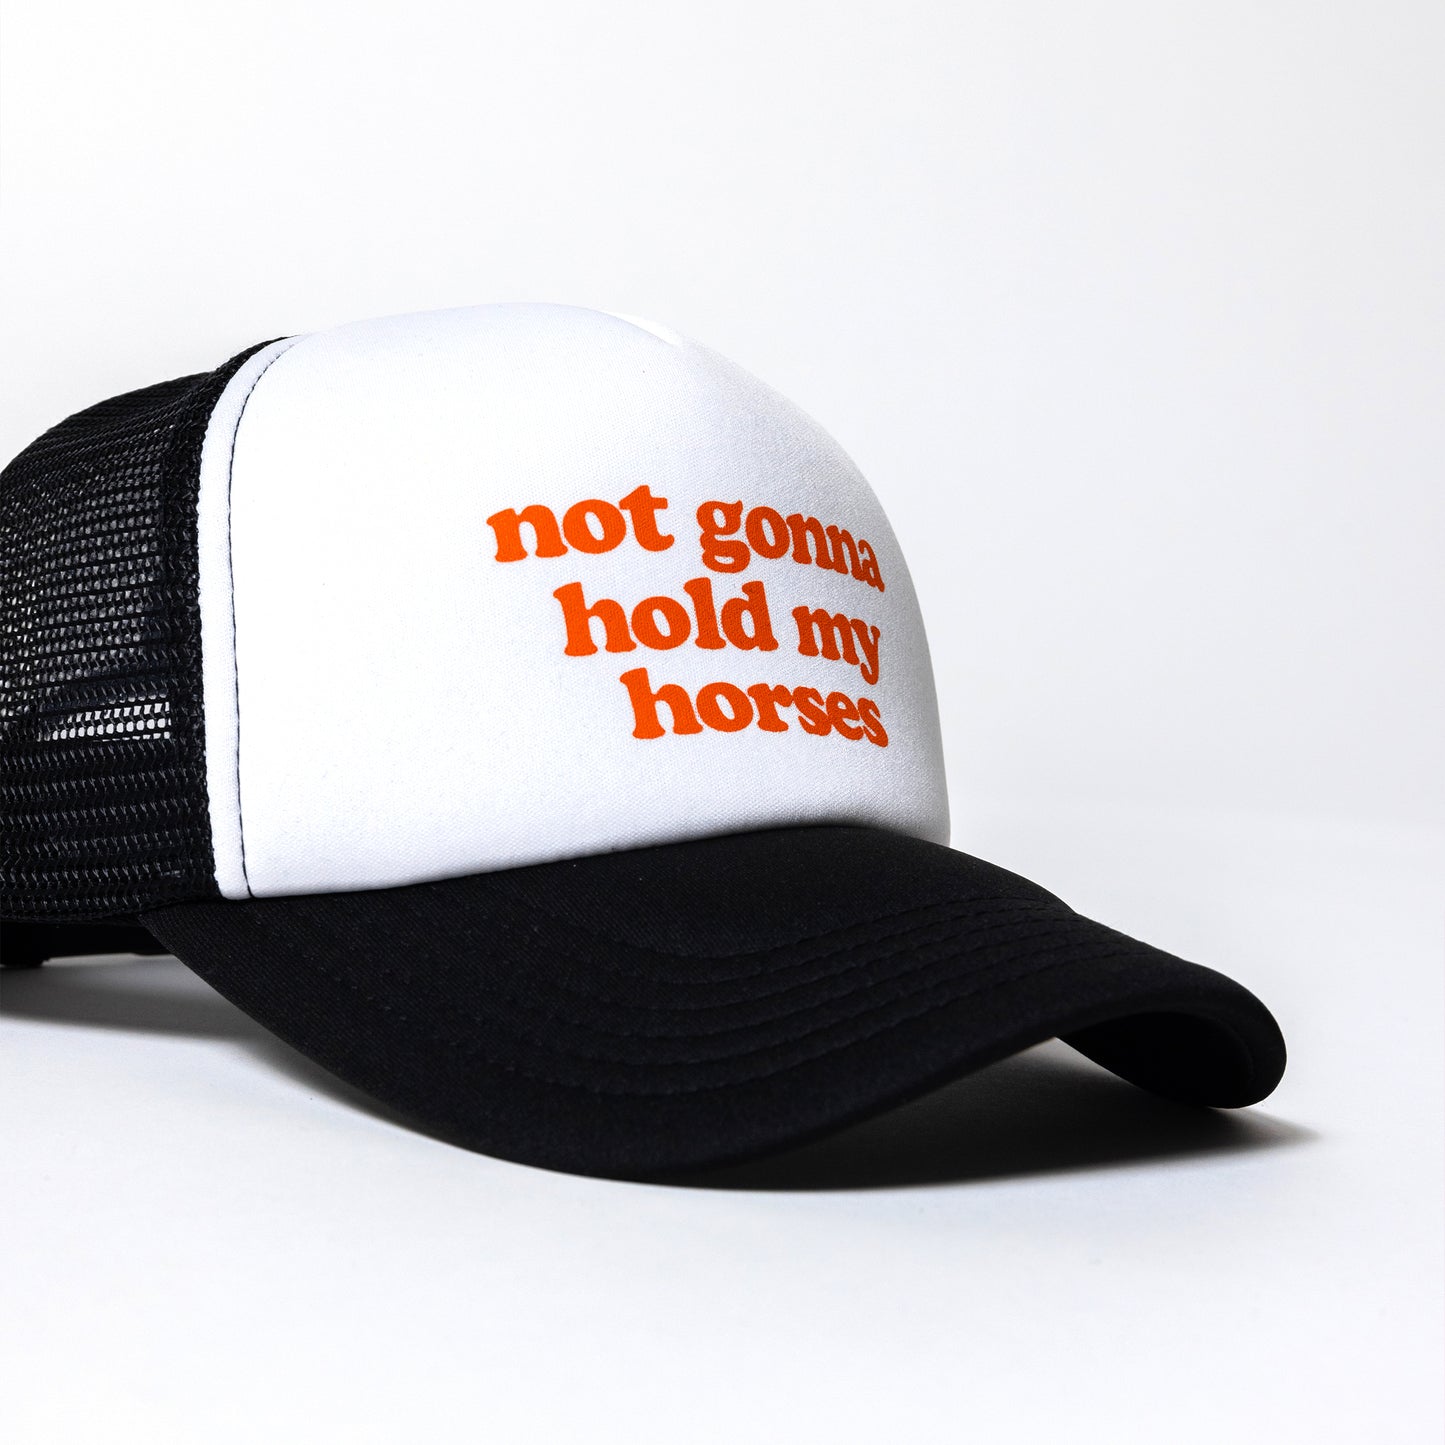 Not Gonna Hold My Horses Trucker Hat